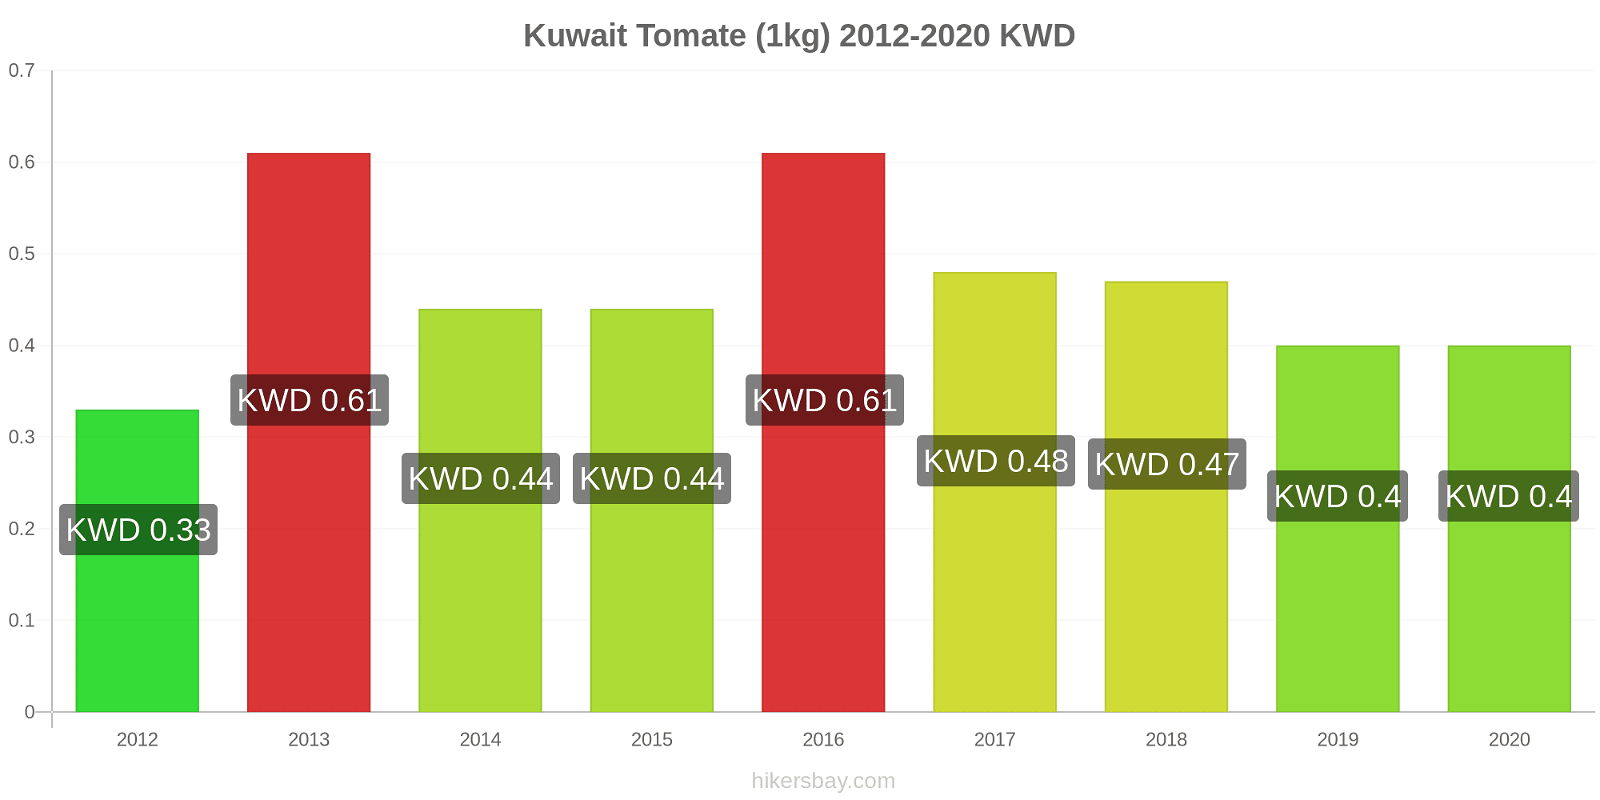 Kuwait variação de preço Tomate (1kg) hikersbay.com